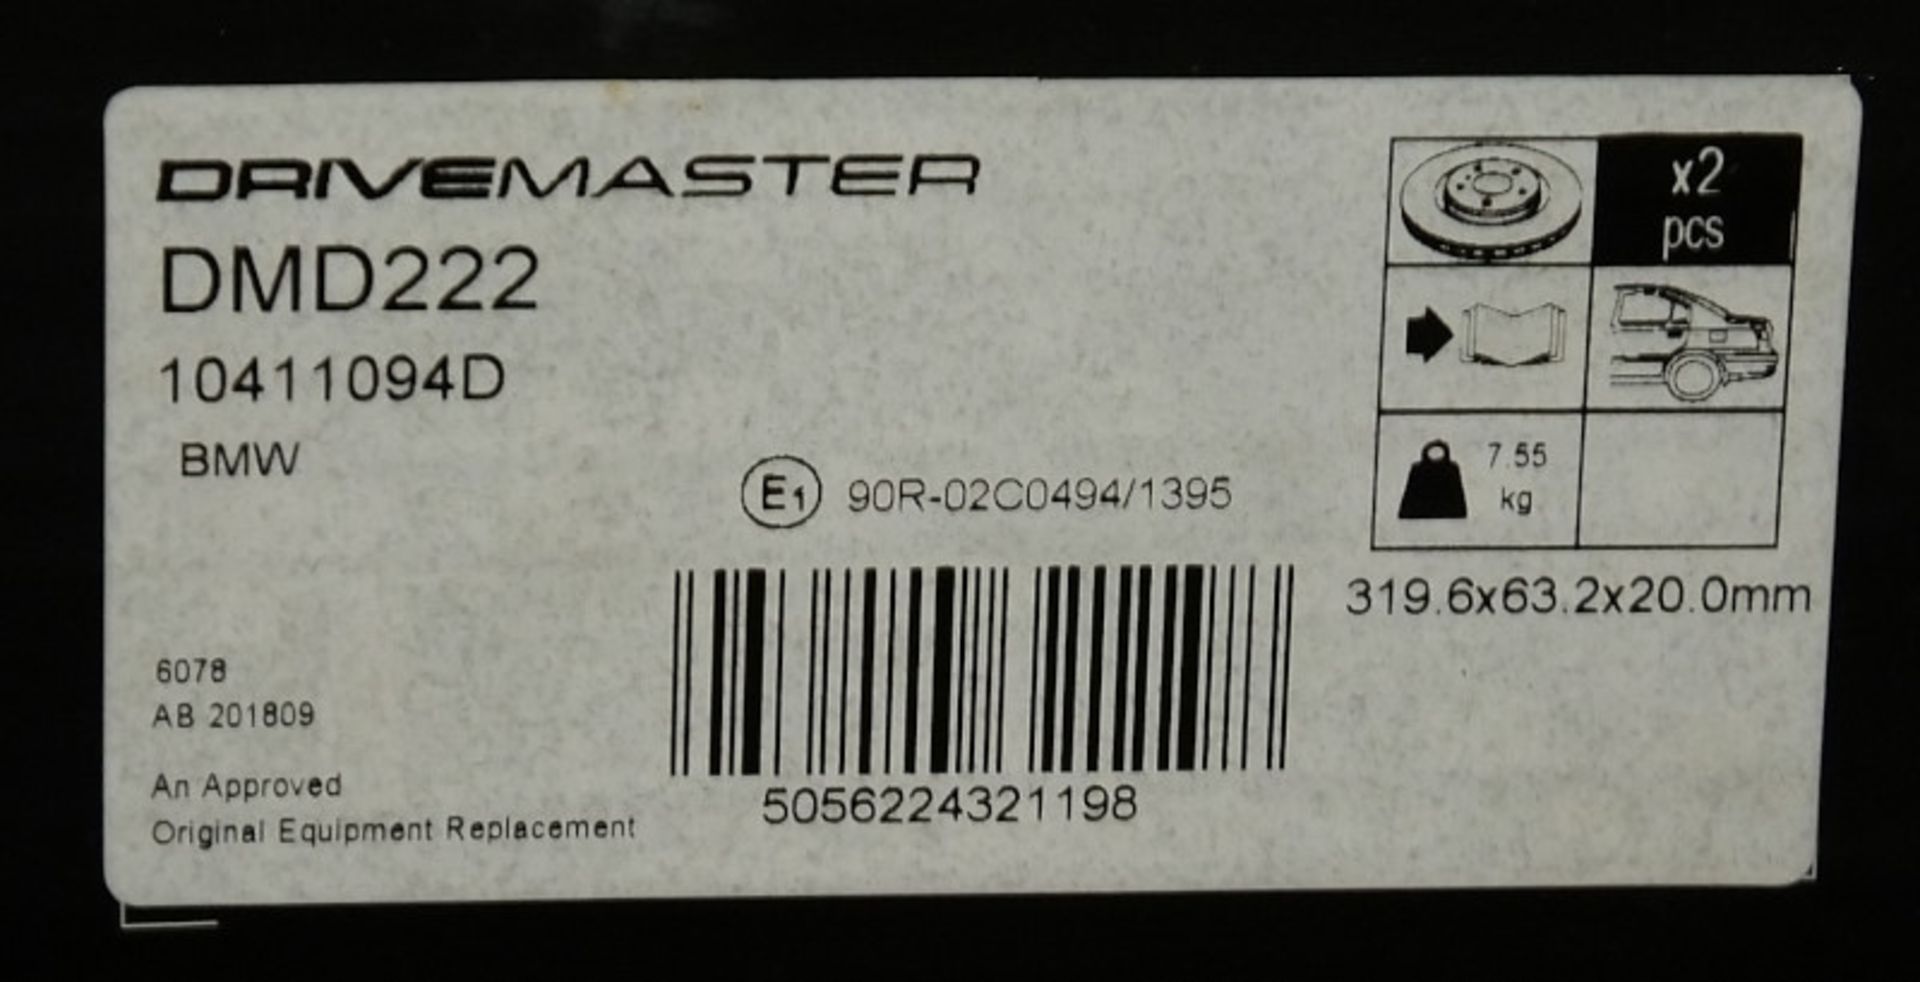 3x Drivemaster Brake Discs - Models - DMD225, DMD010 & DMD222 - Image 4 of 4